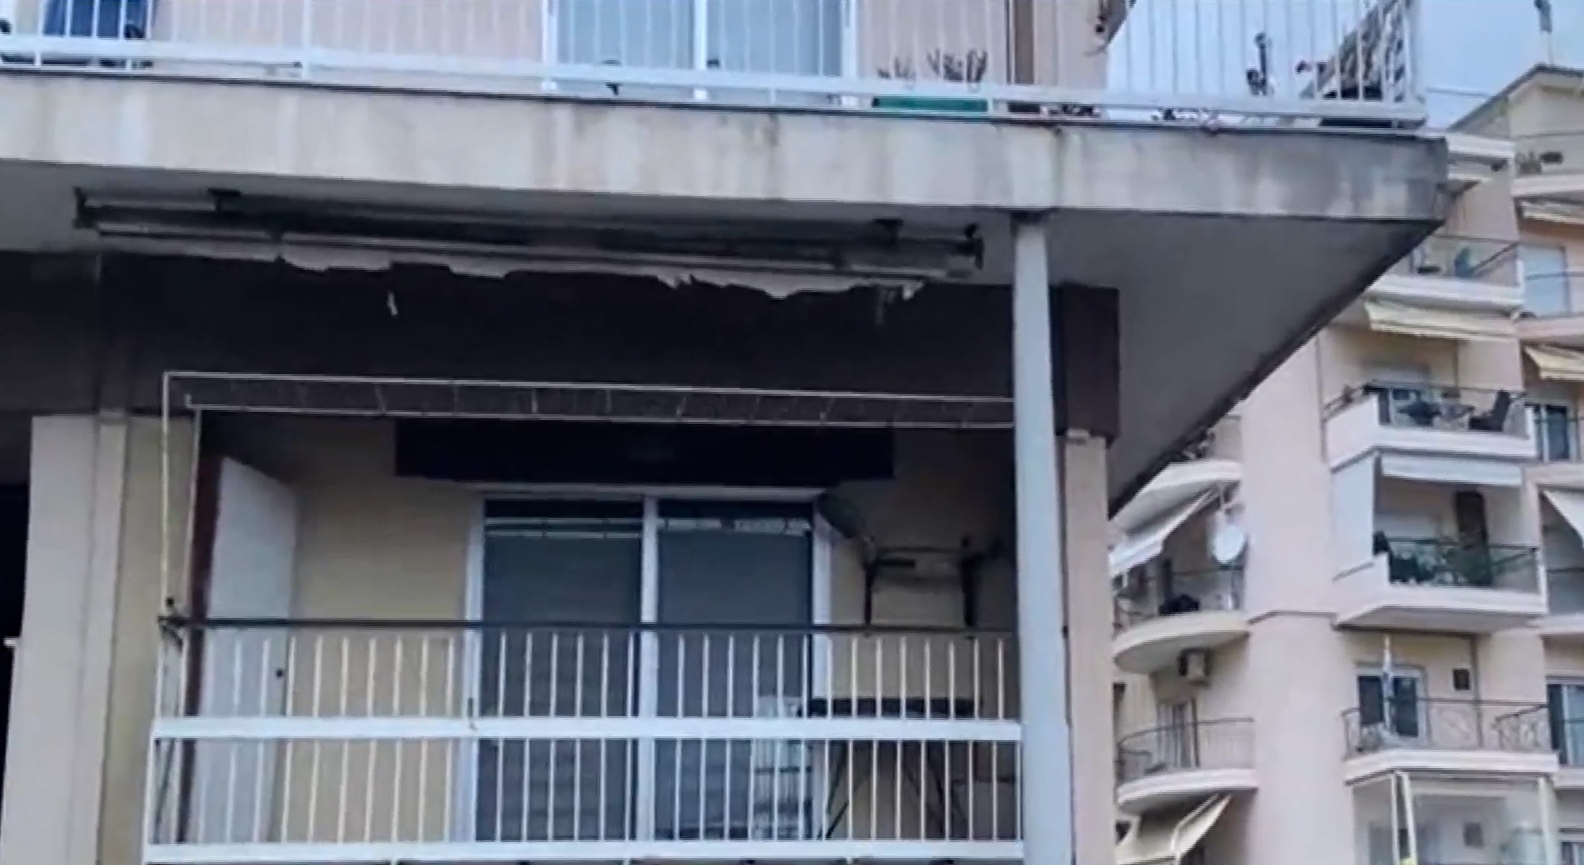 Viral το βίντεο με κολώνα φωτισμού που περνά μέσα από μπαλκόνι στην Ξάνθη – Έχει γίνει σήμα κατατεθέν της πόλης